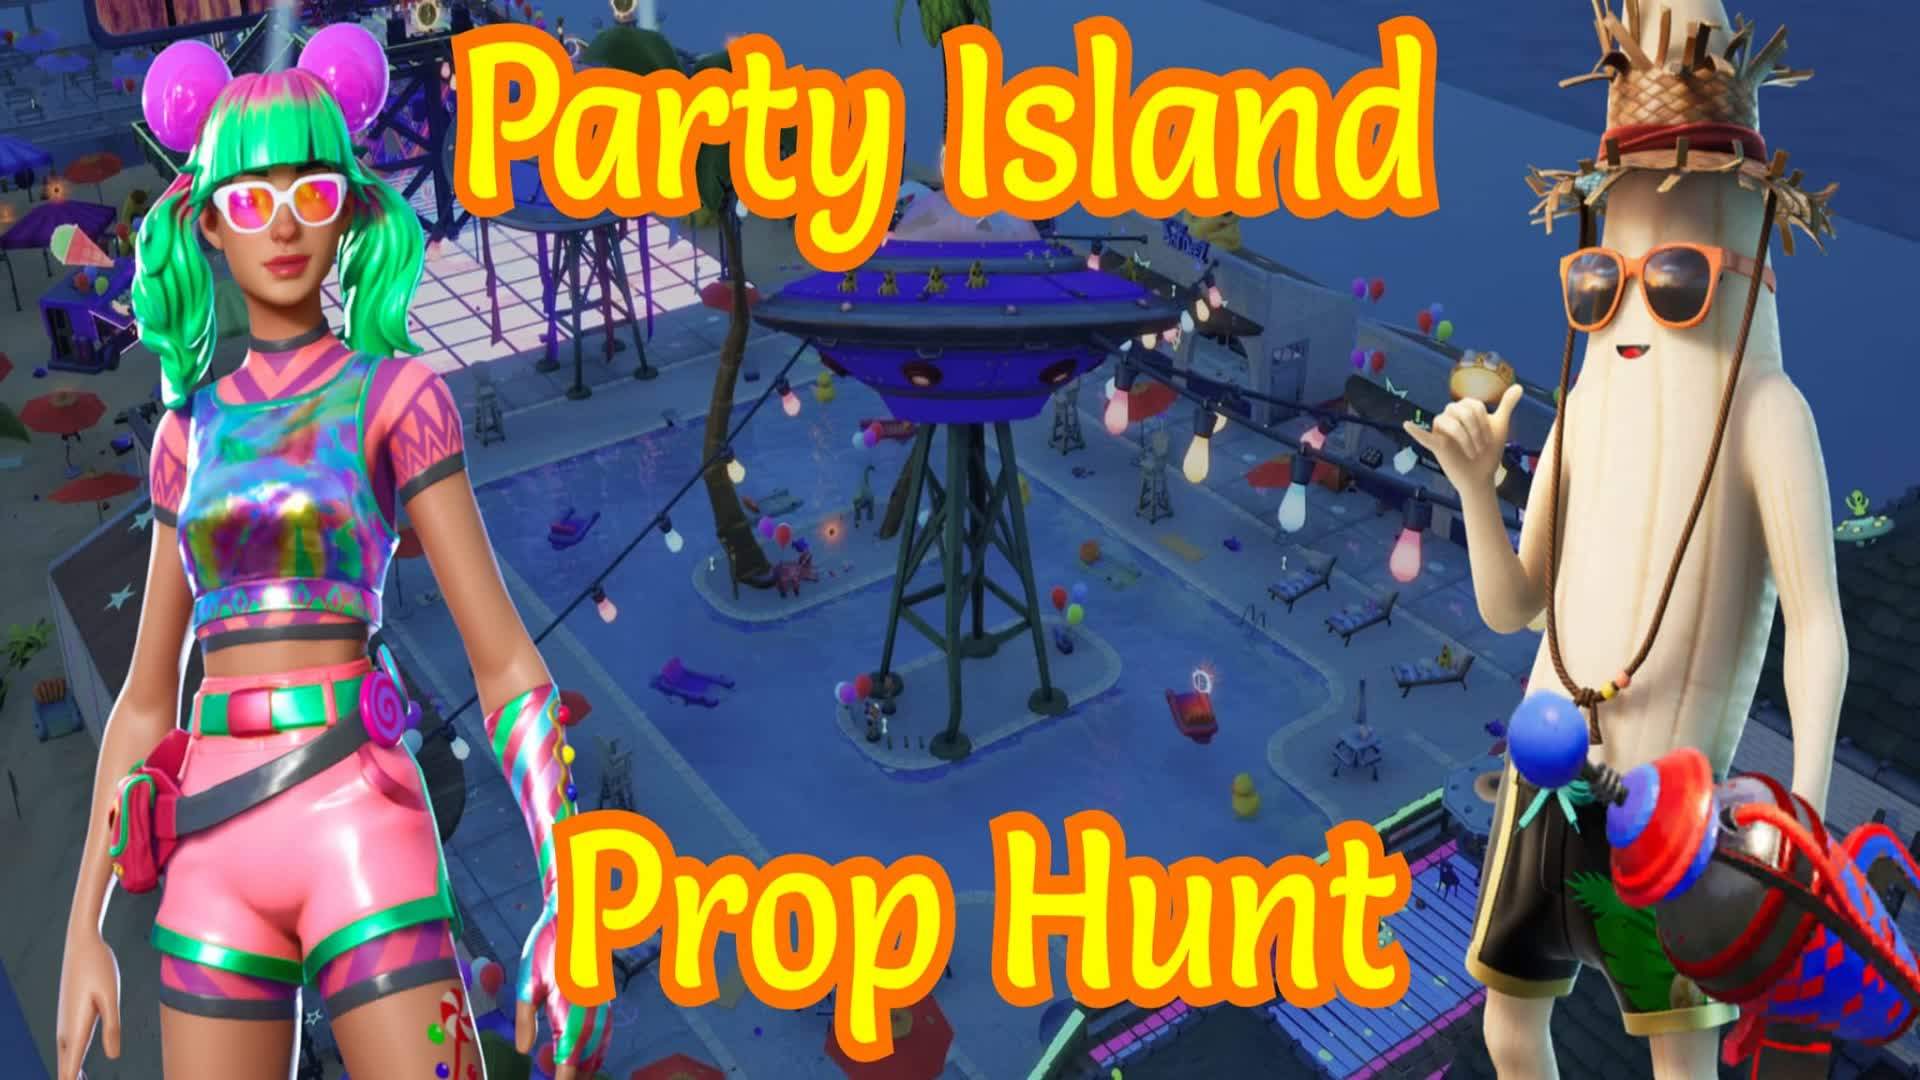 🎉Party Island Prop Hunt 🏝